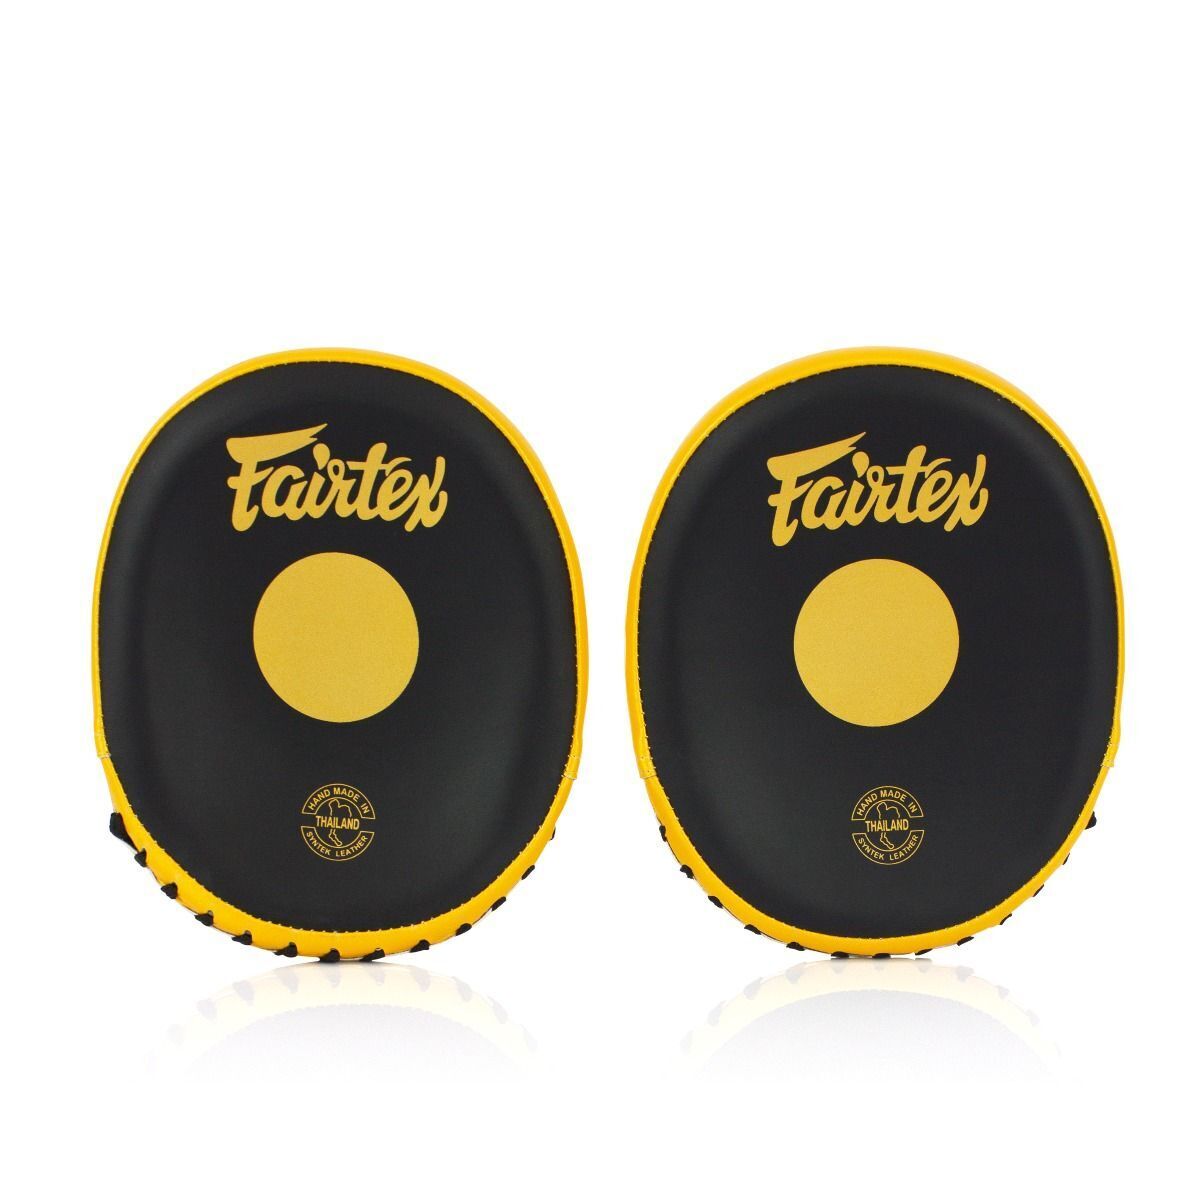 FAIRTEX - Micro Focus Mitts (Black/Gold)